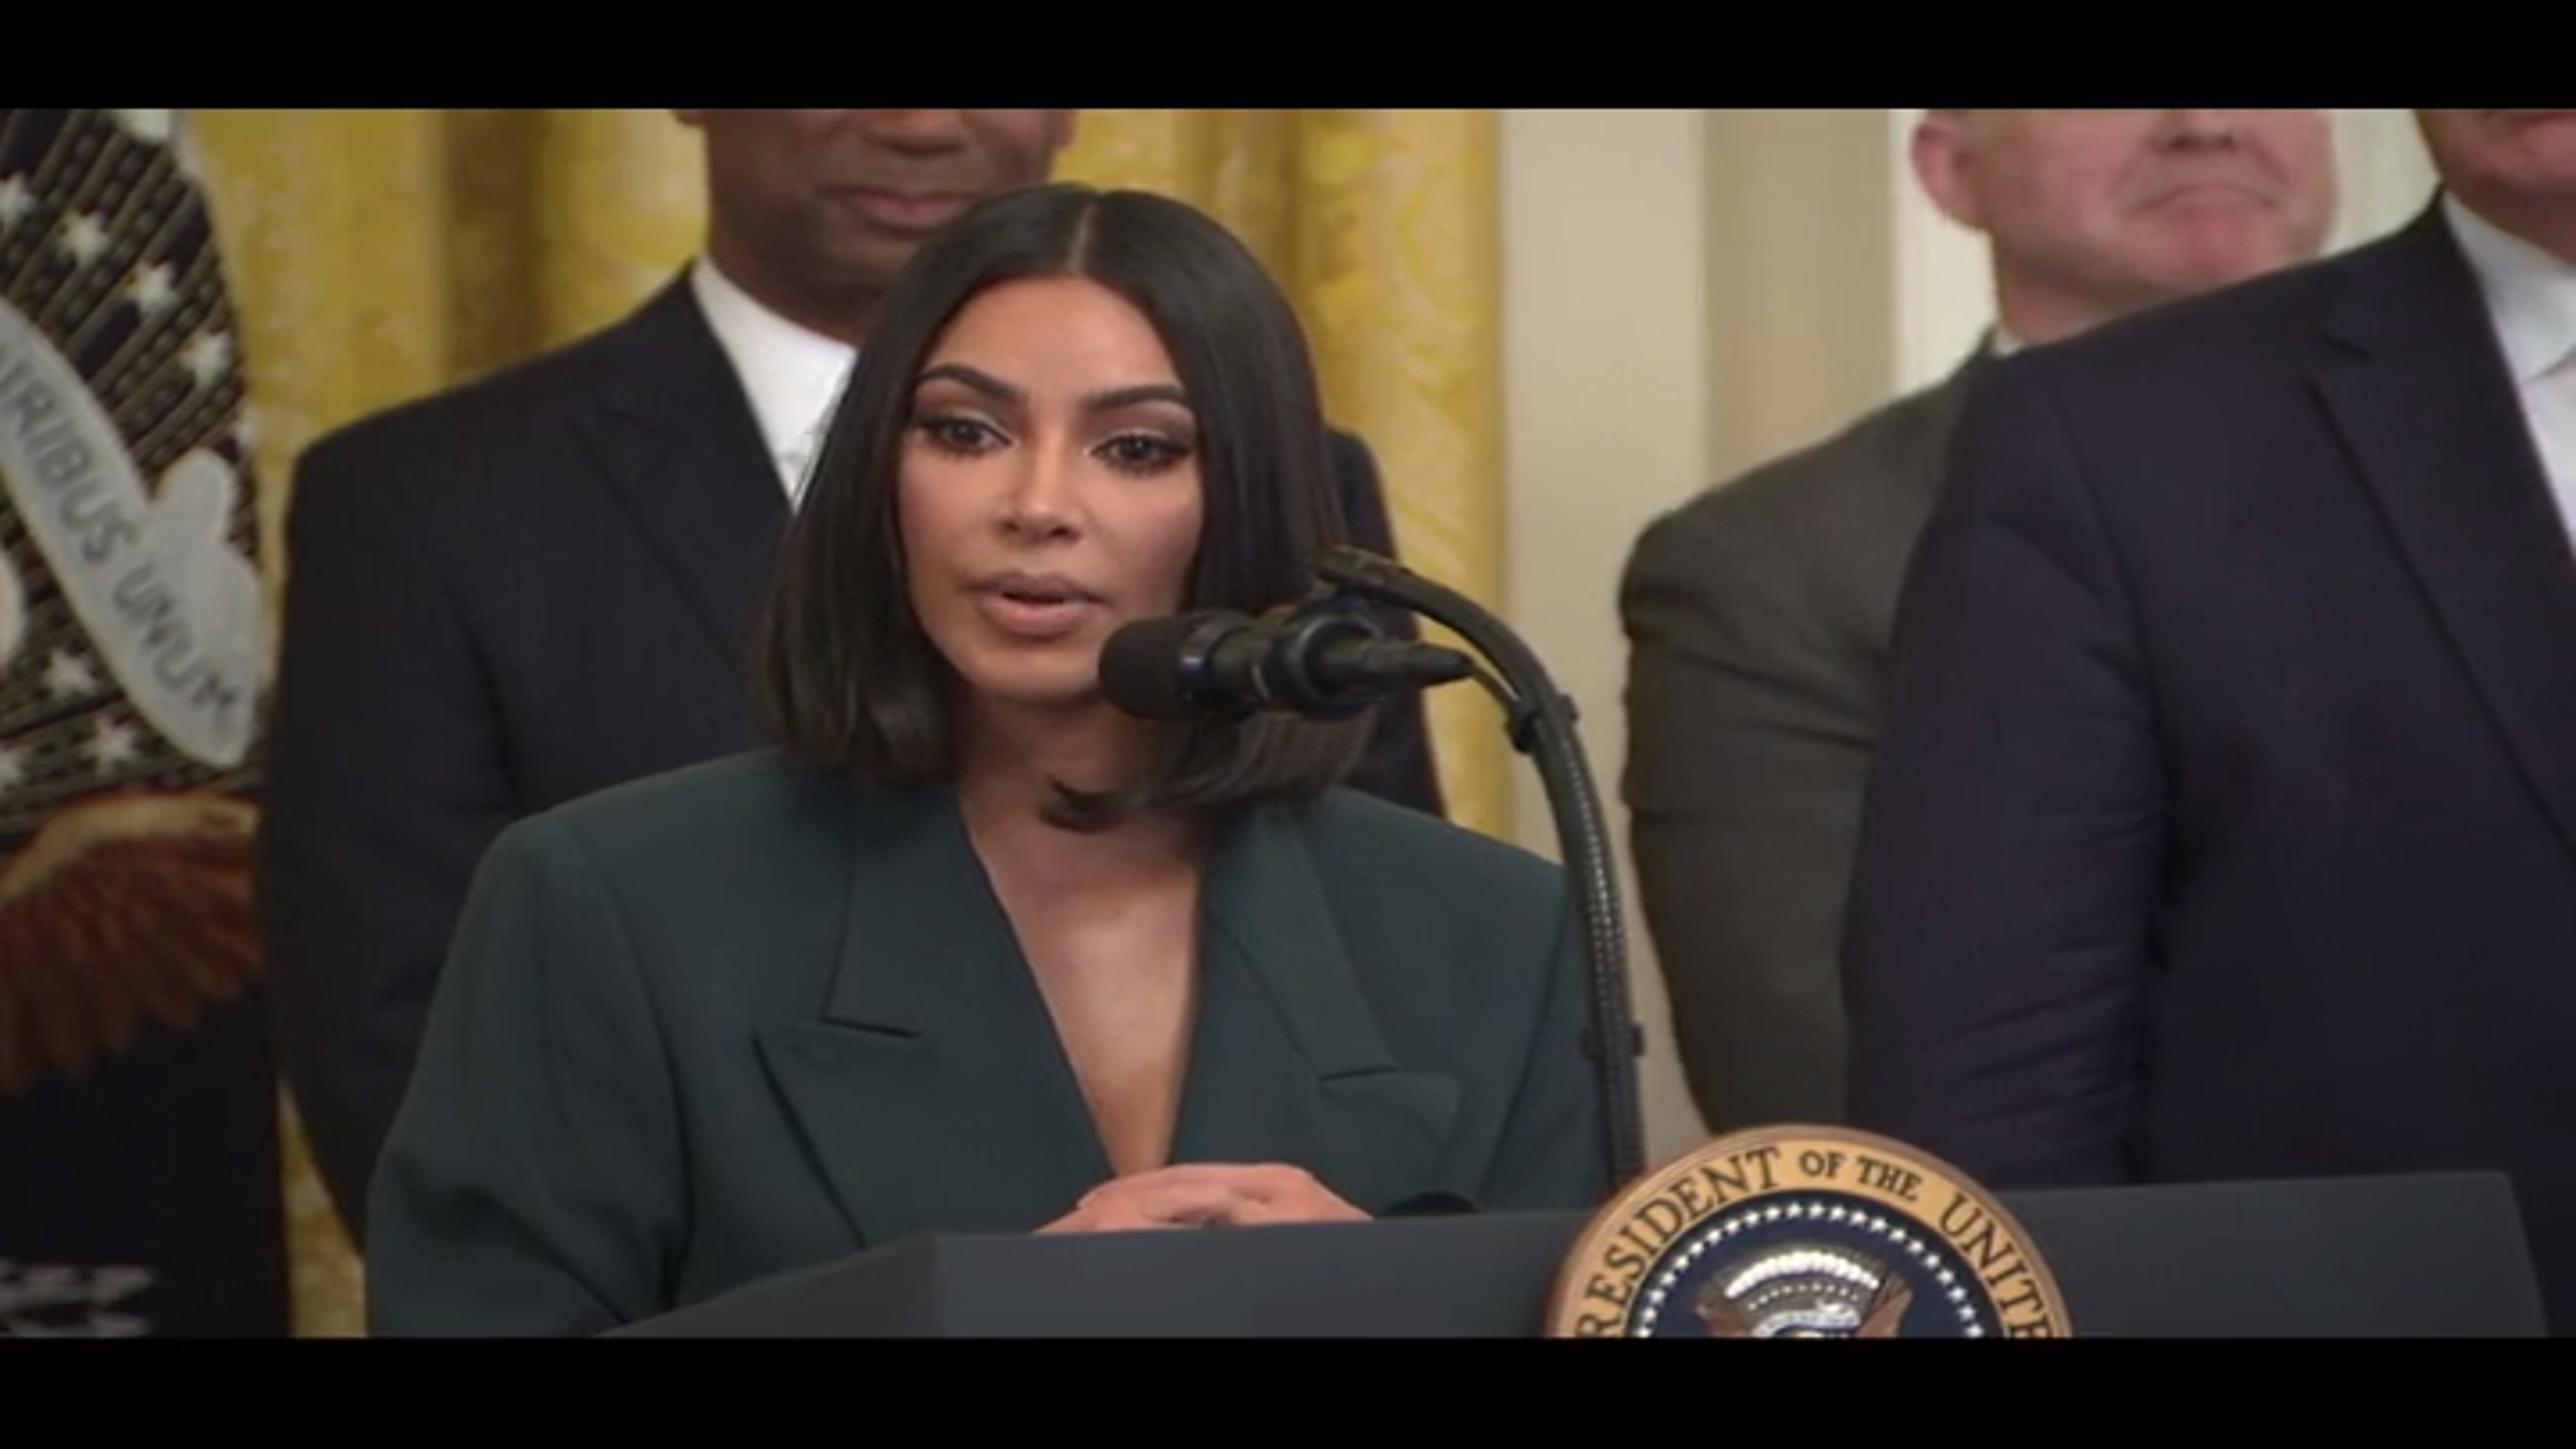 Kim Kardashian assists Trump's justice reforms